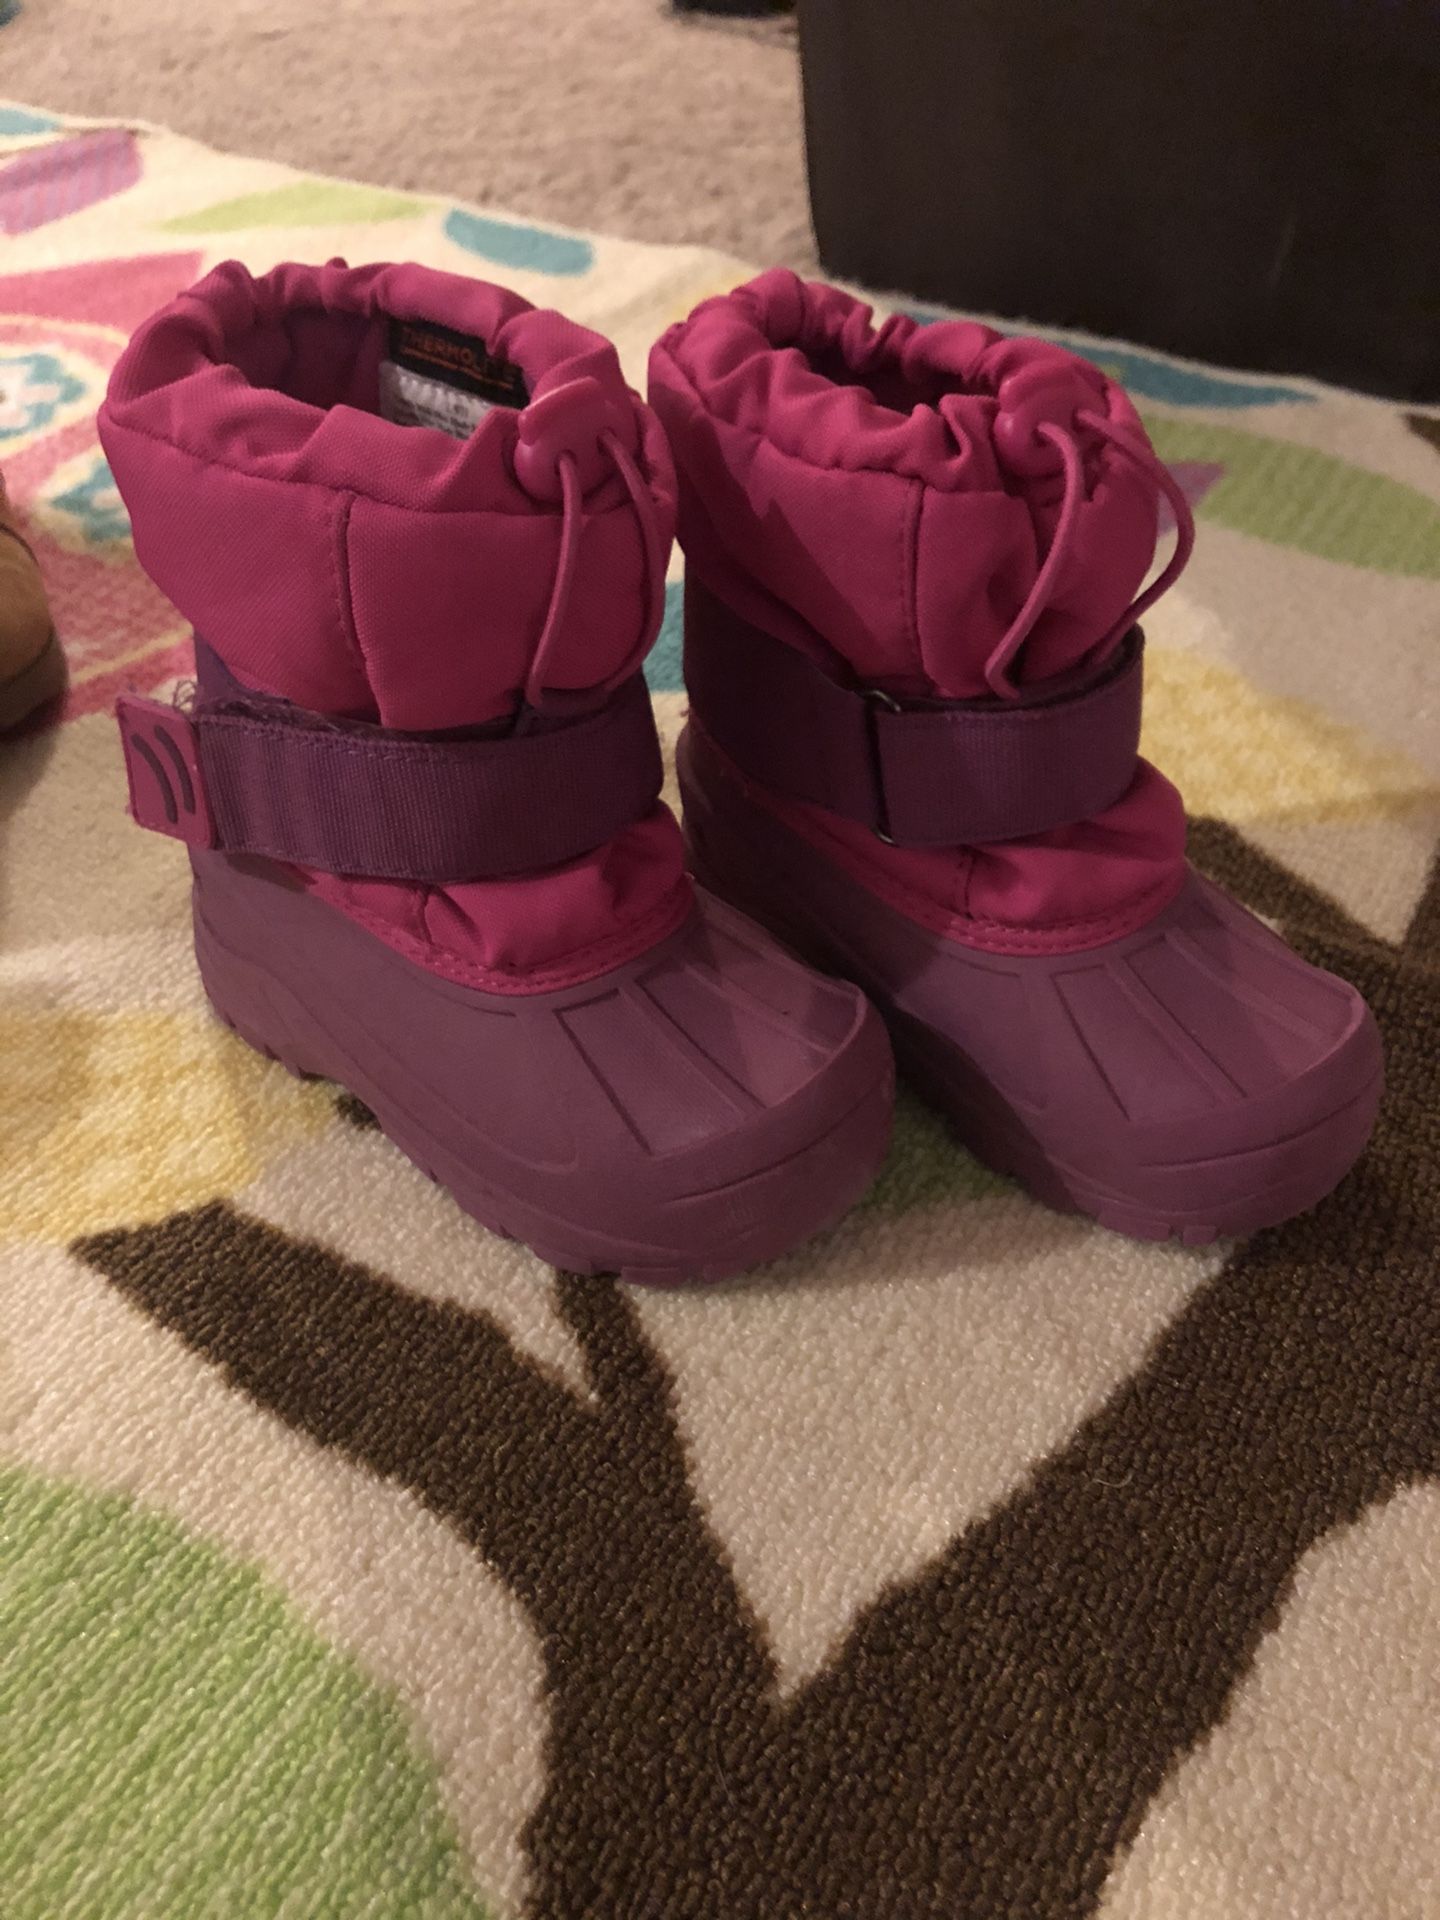 Kids snow boots- Size 9/10.